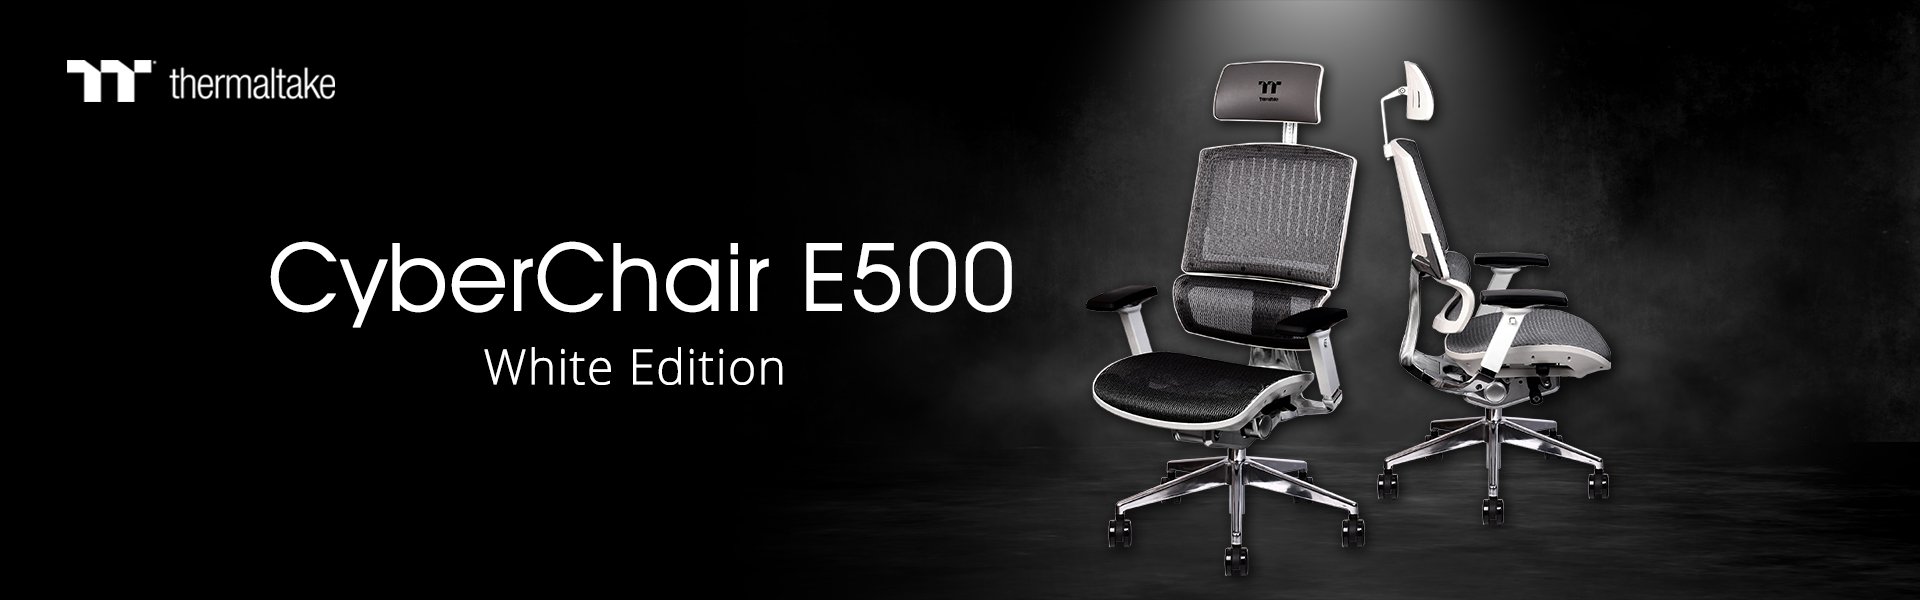 thermaltakes-cyberchair-e500-white-edition-ergonomic-chair_1